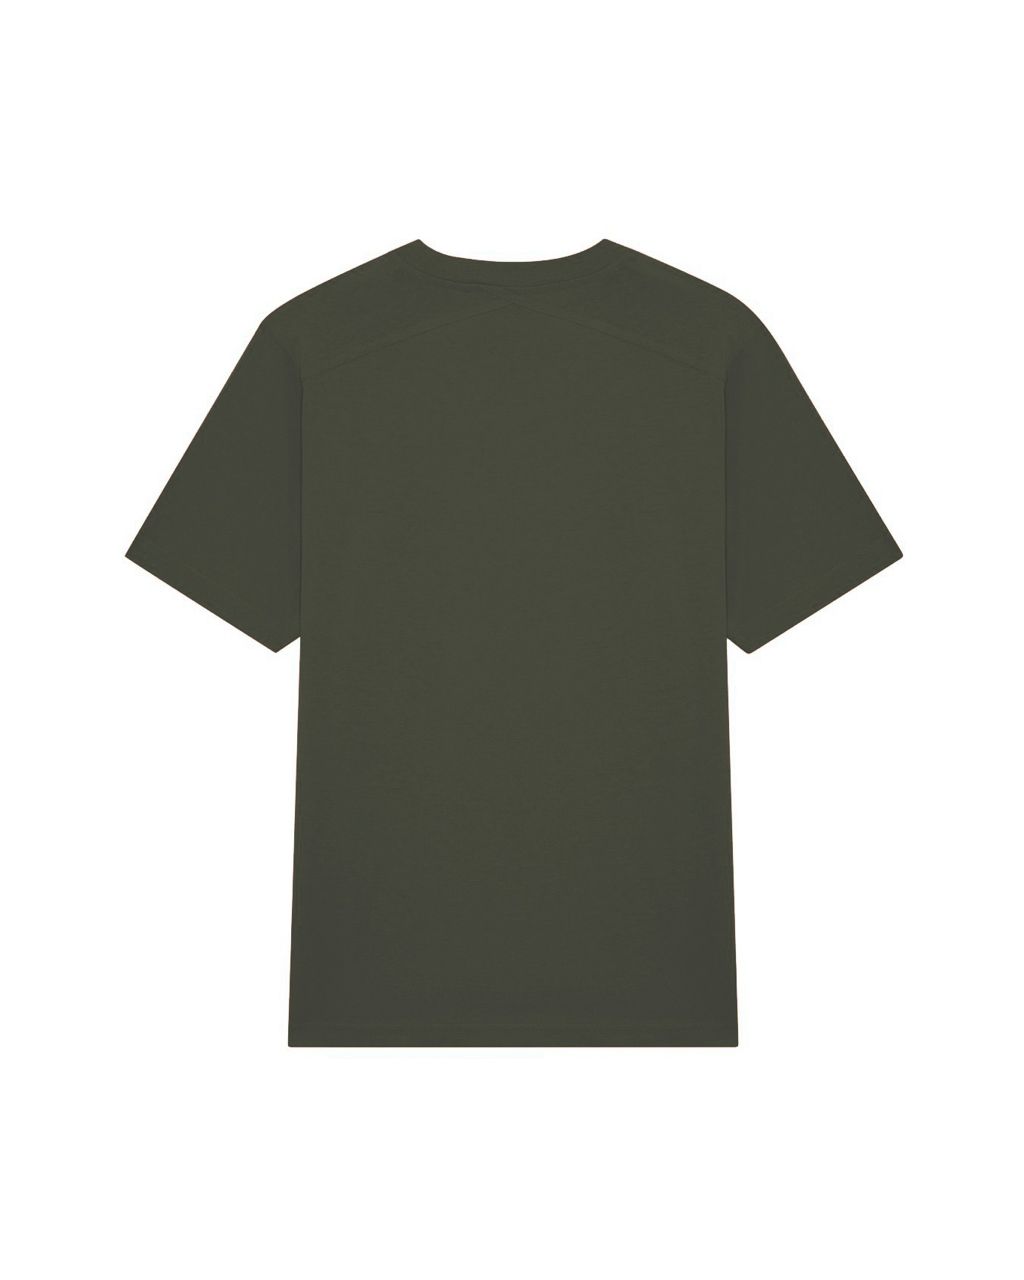 MA.STRUM T-shirt KM Donker groen 075269-001-L